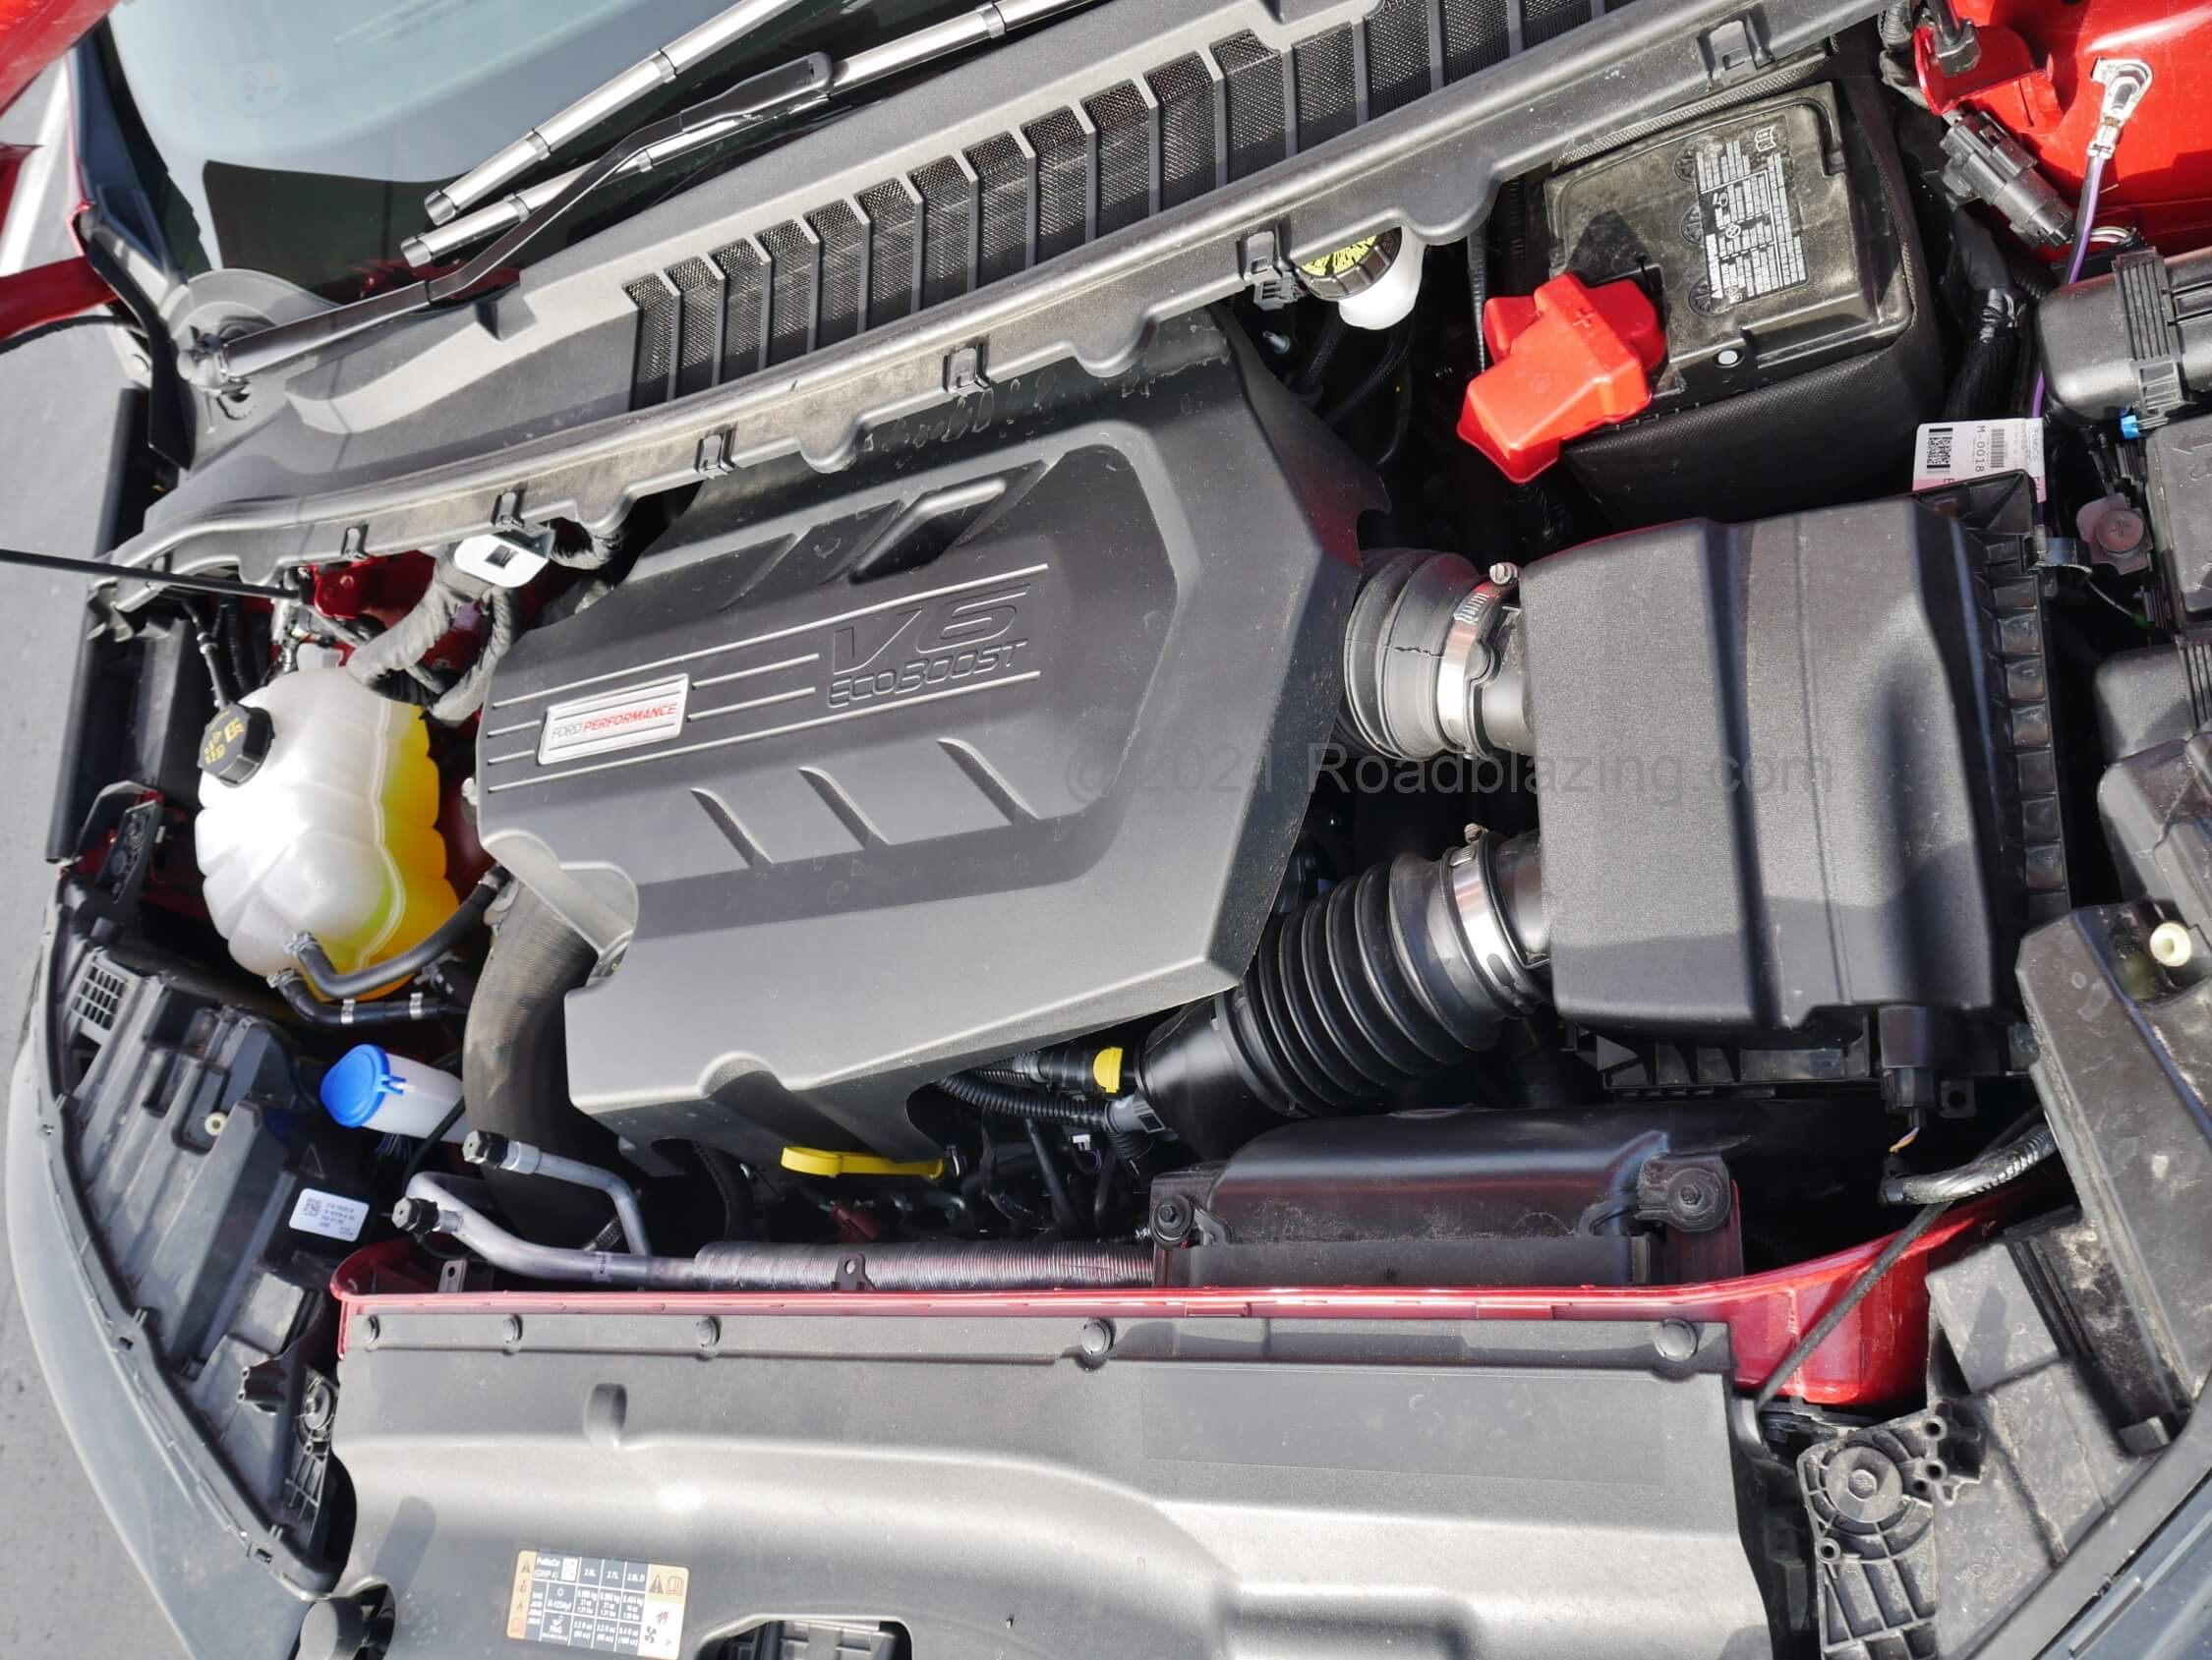 2020 Ford Edge ST: 8-speed automatic transaxle = +2 gears vs. Edge Sport